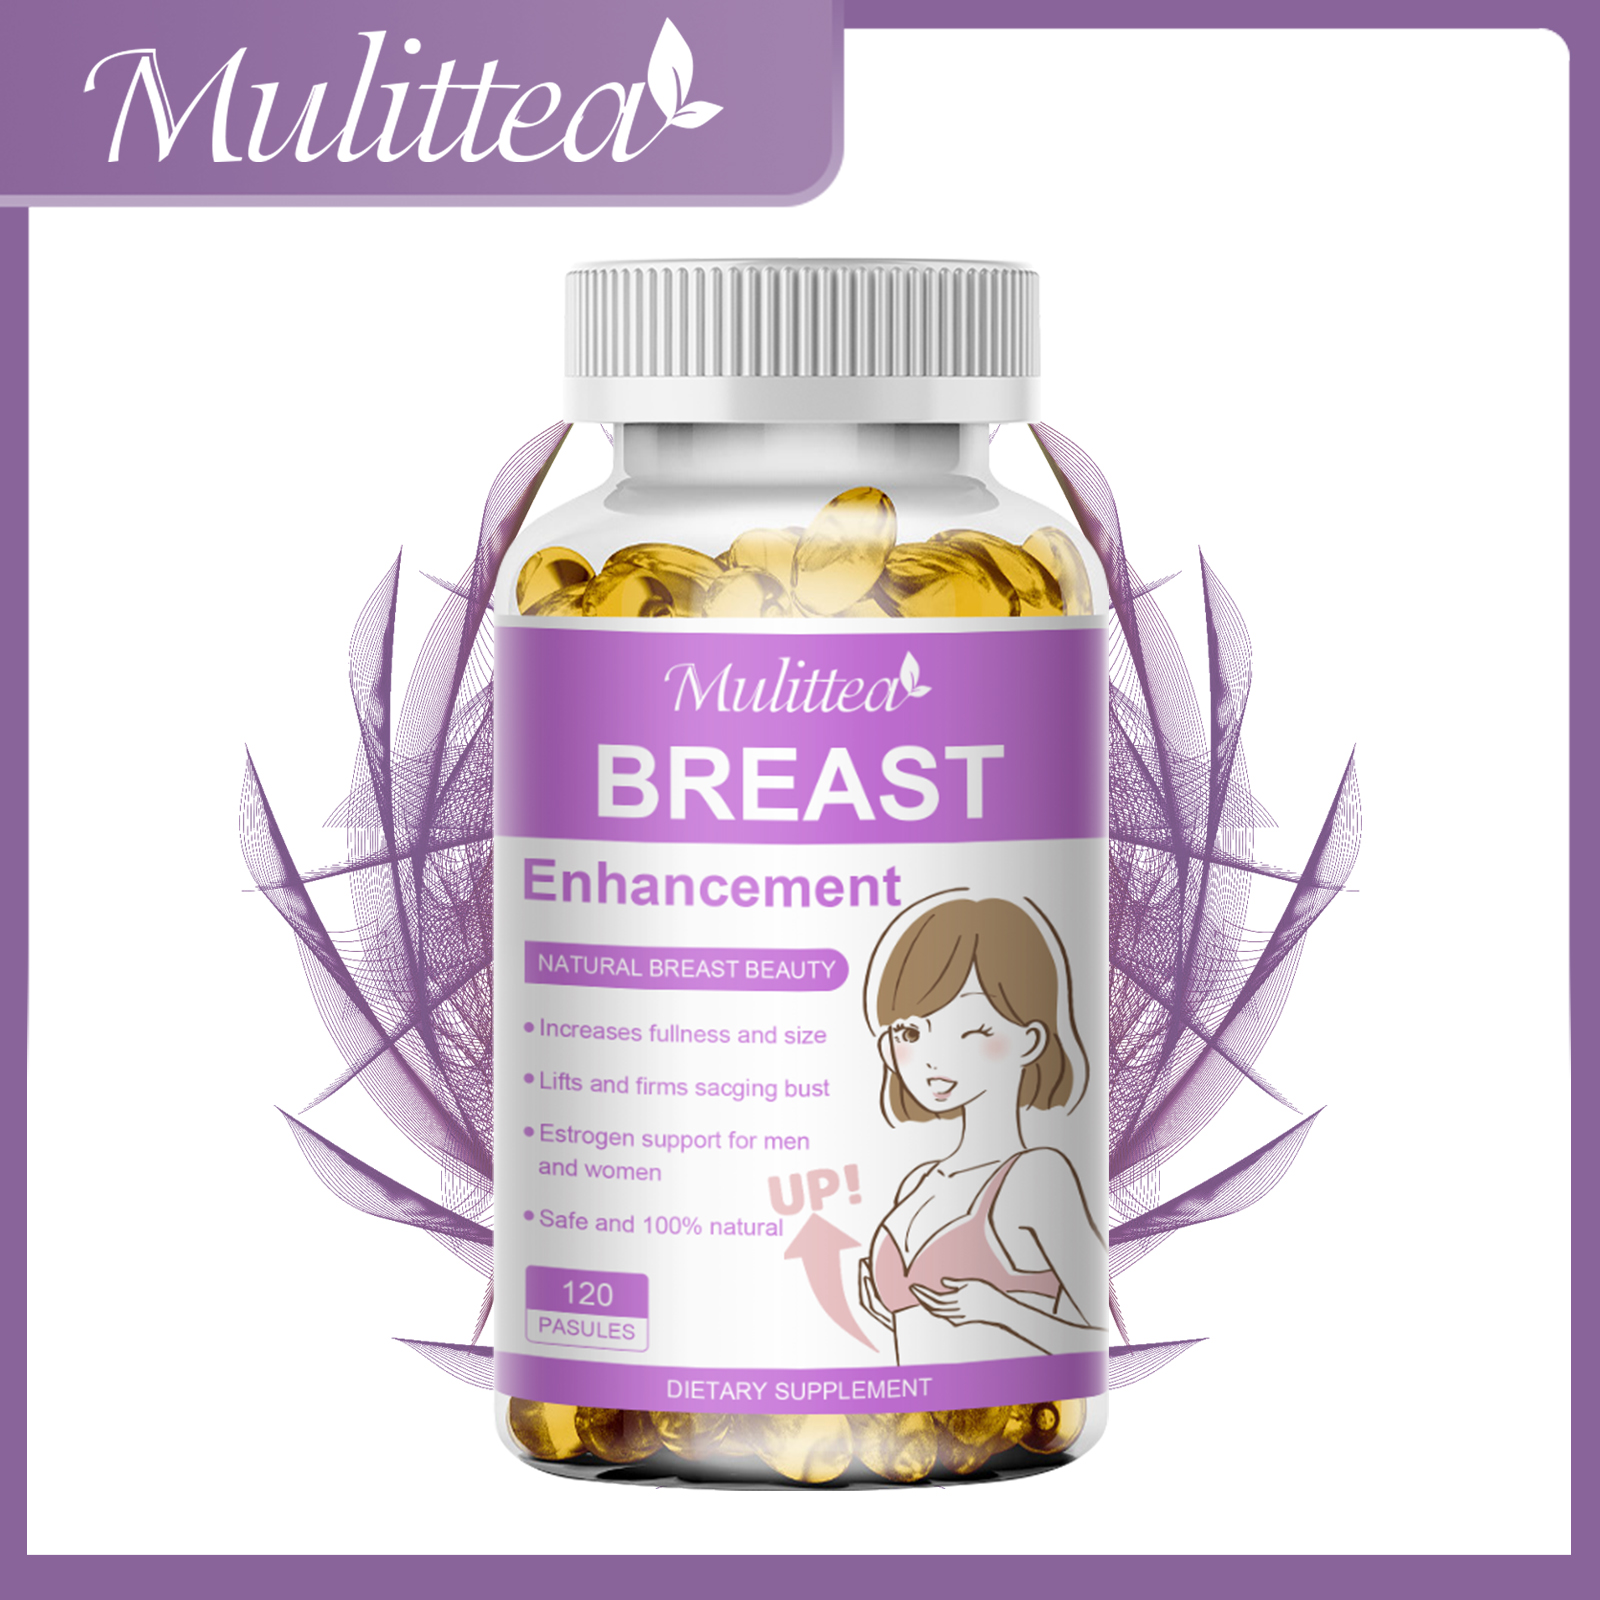 Mulittea Breast Enhancement Capsules for Breast Enlargement Enhance and